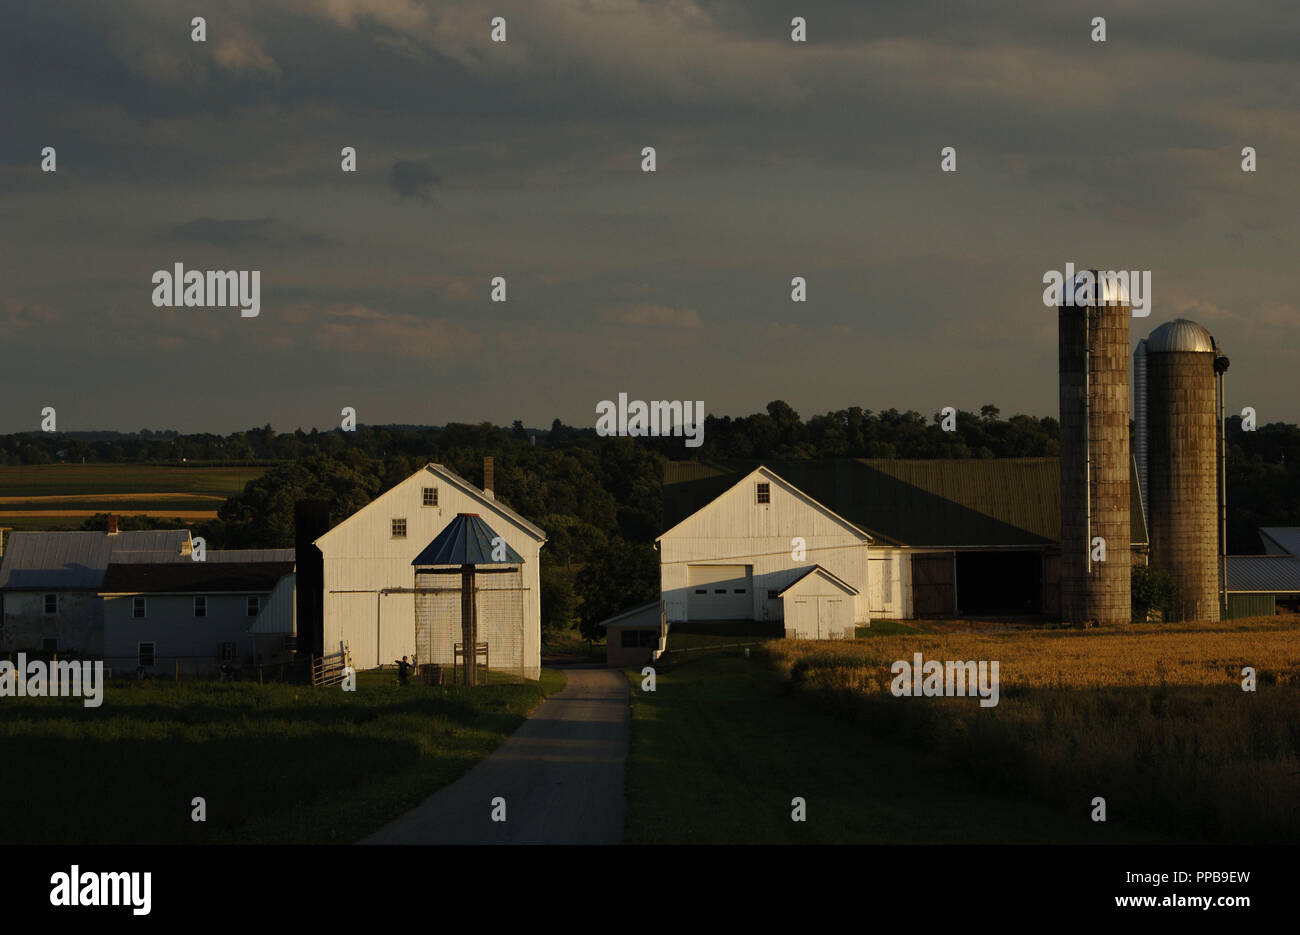 United States. Pennsylvania. Philadelphia. The Amish Village. Near Lancaster. Stock Photo